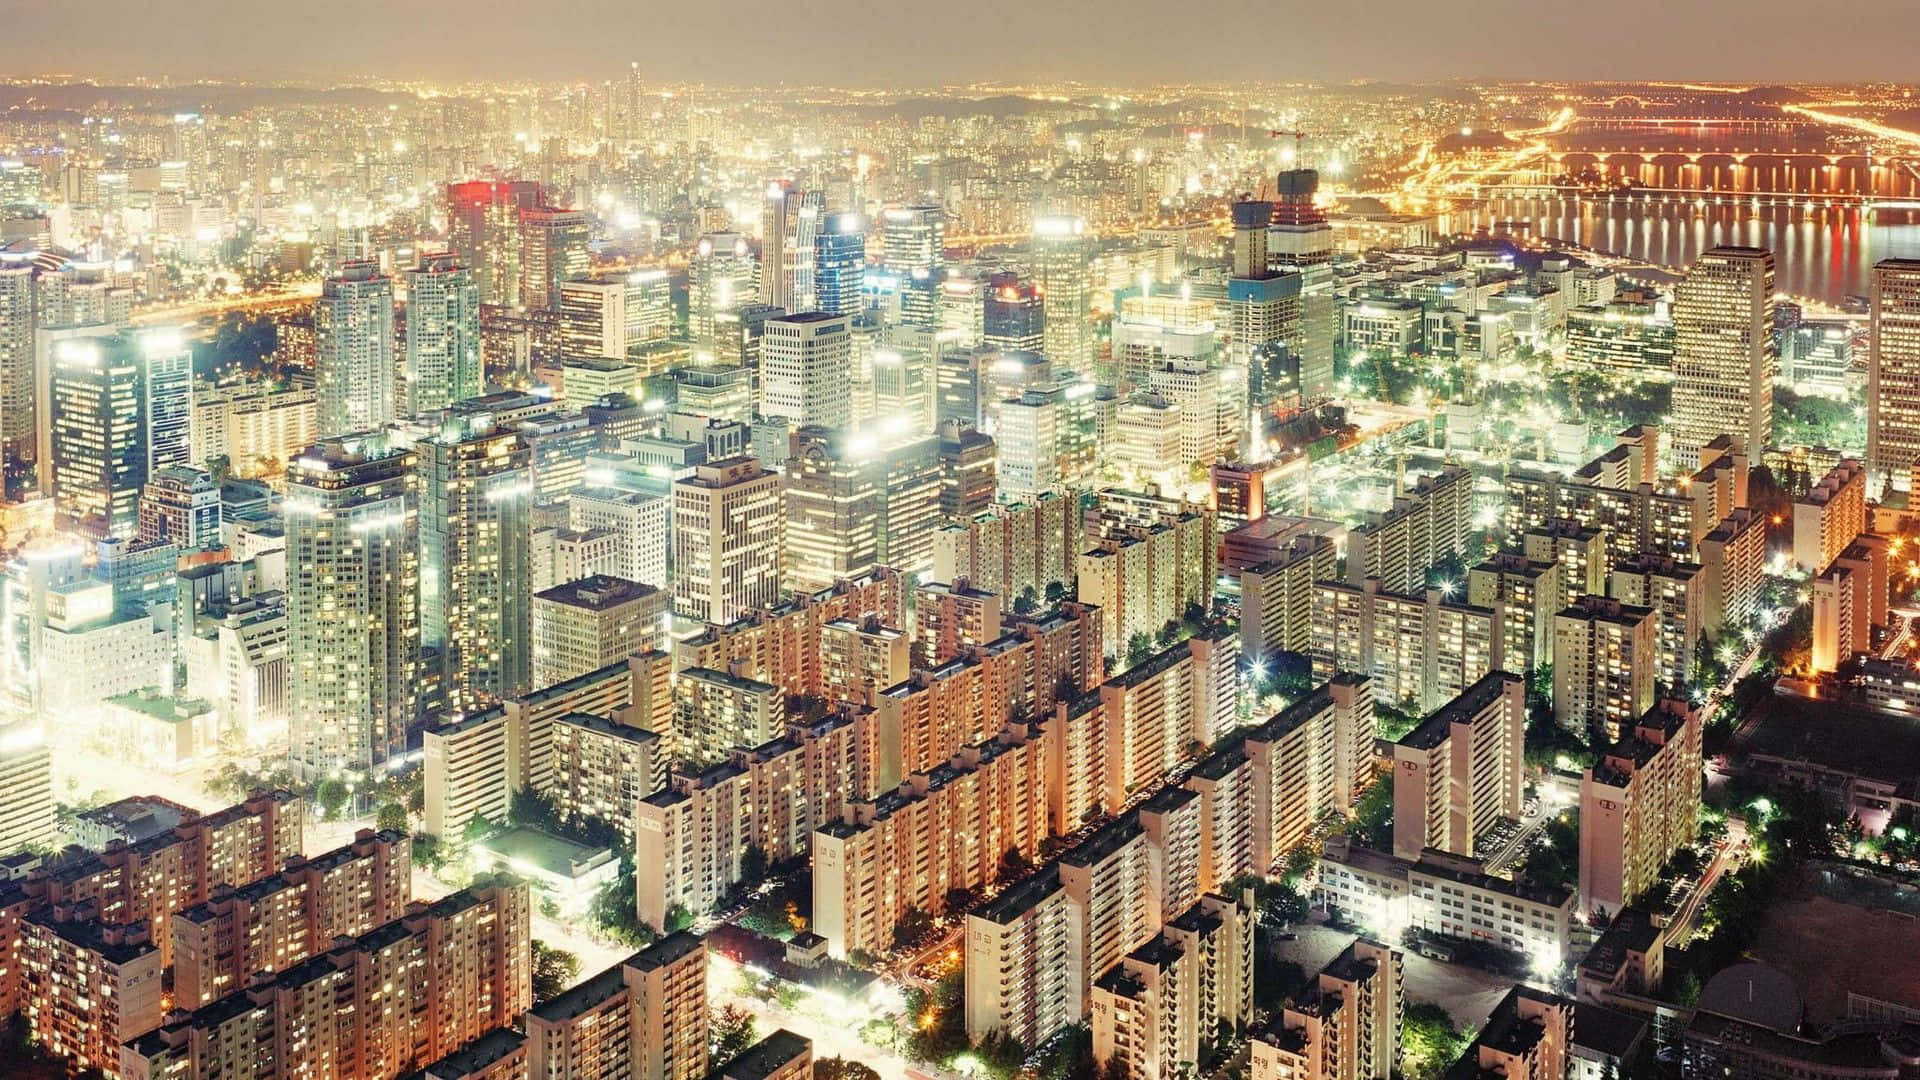 Stunning Seoul city skyline at night